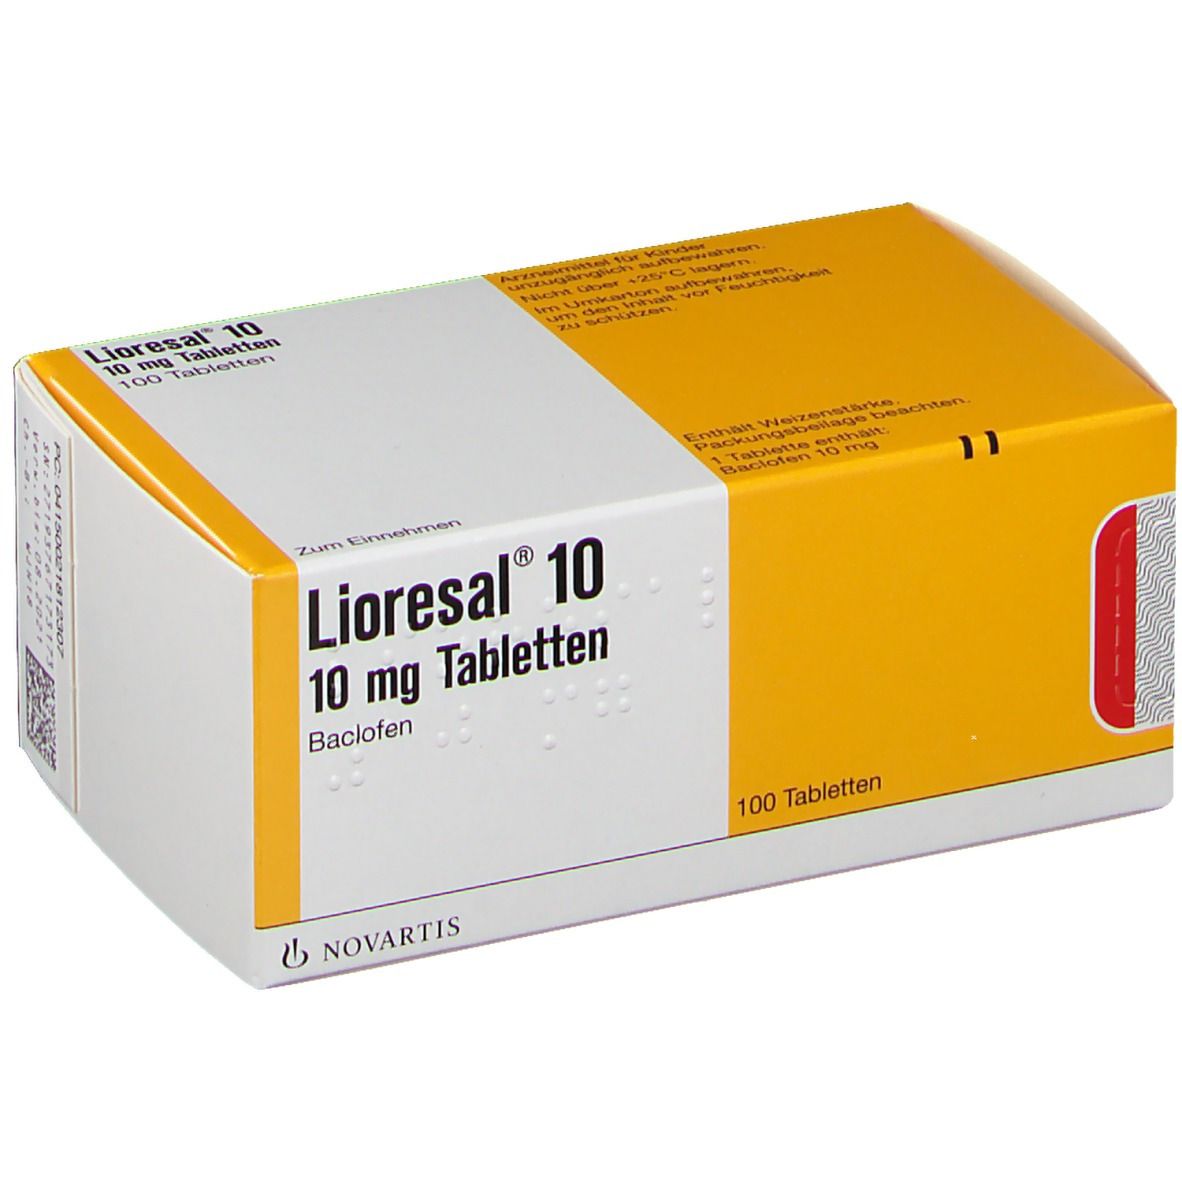 Lioresal® 10 mg